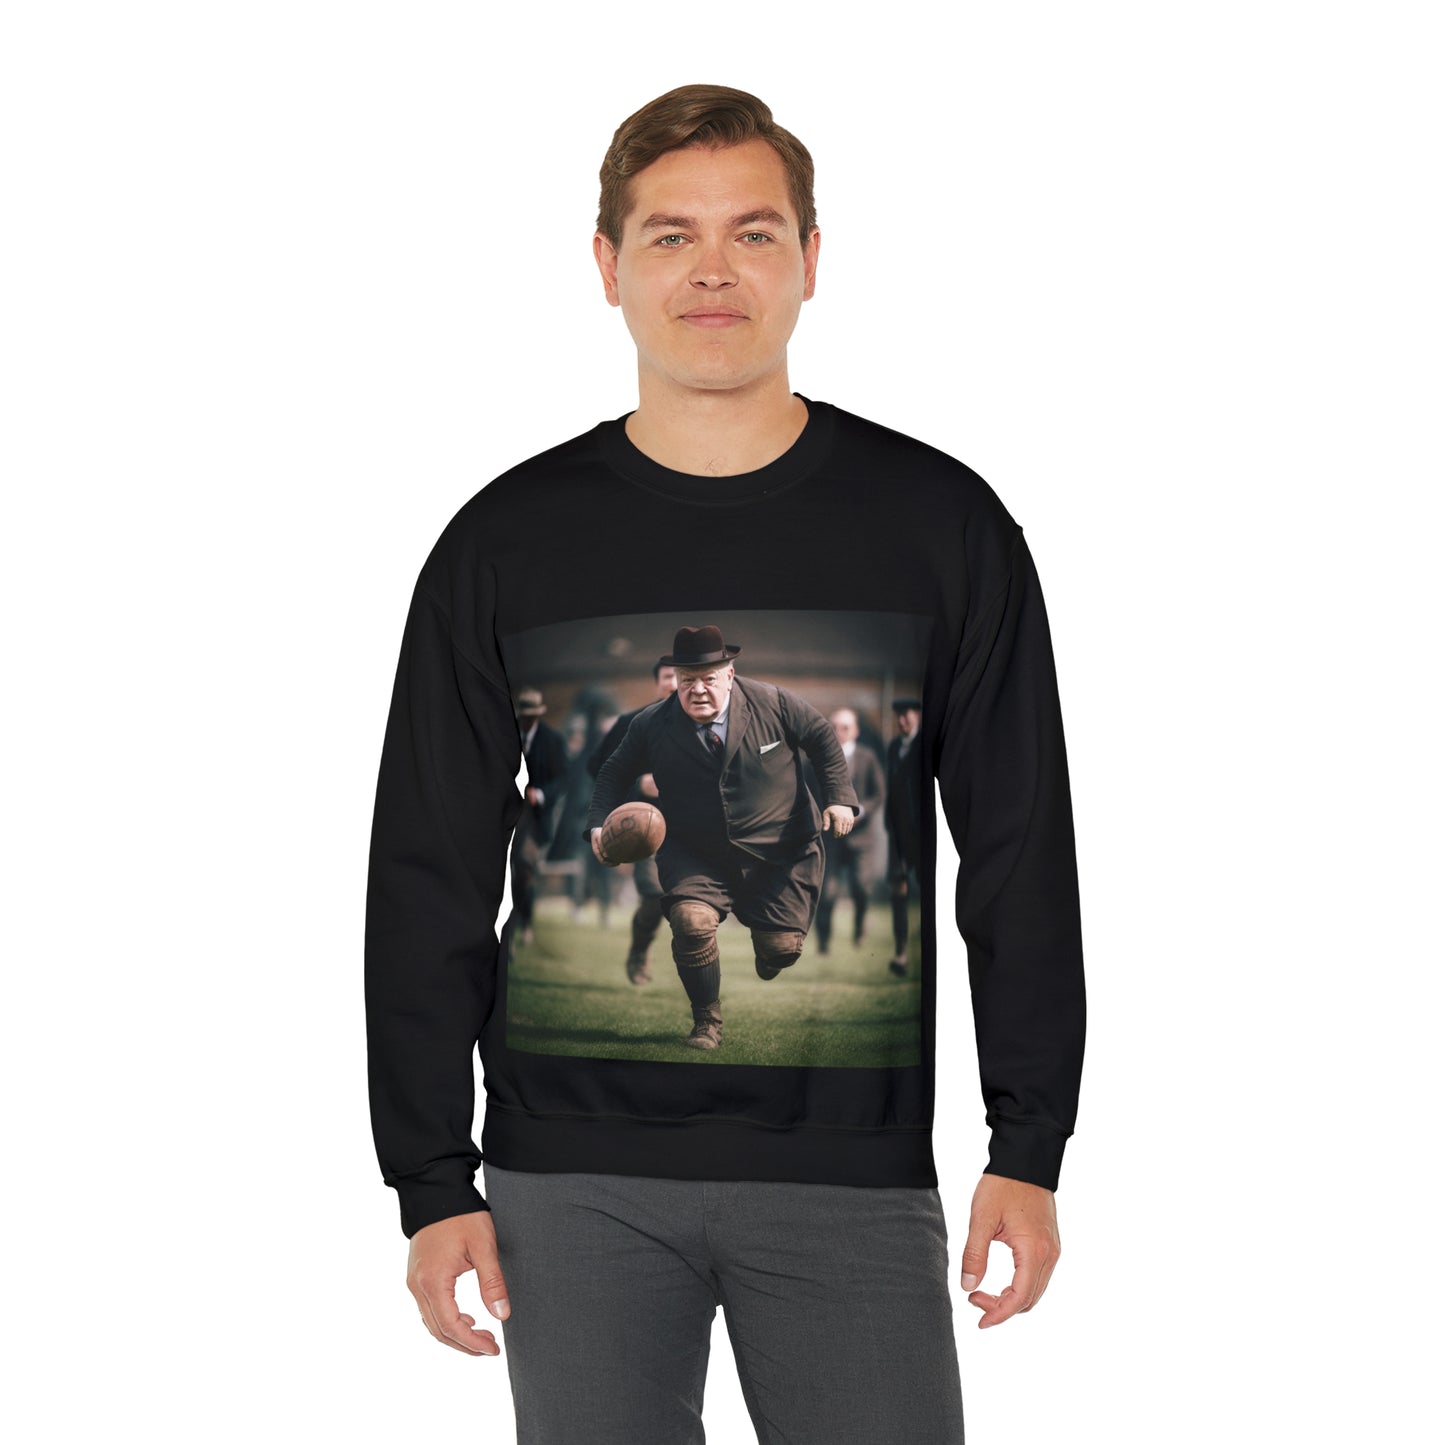 Winston Churchill - black sweatshirt